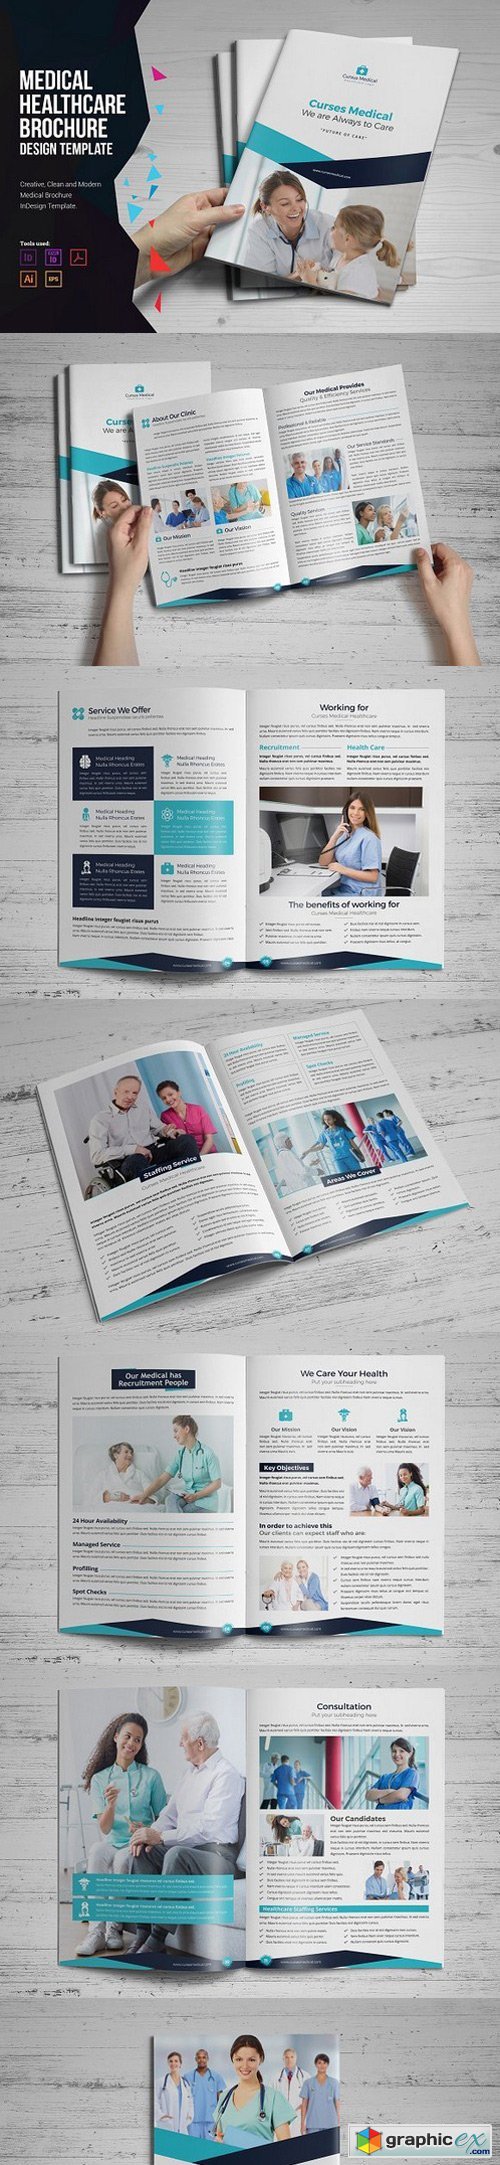 Medical HealthCare Brochure